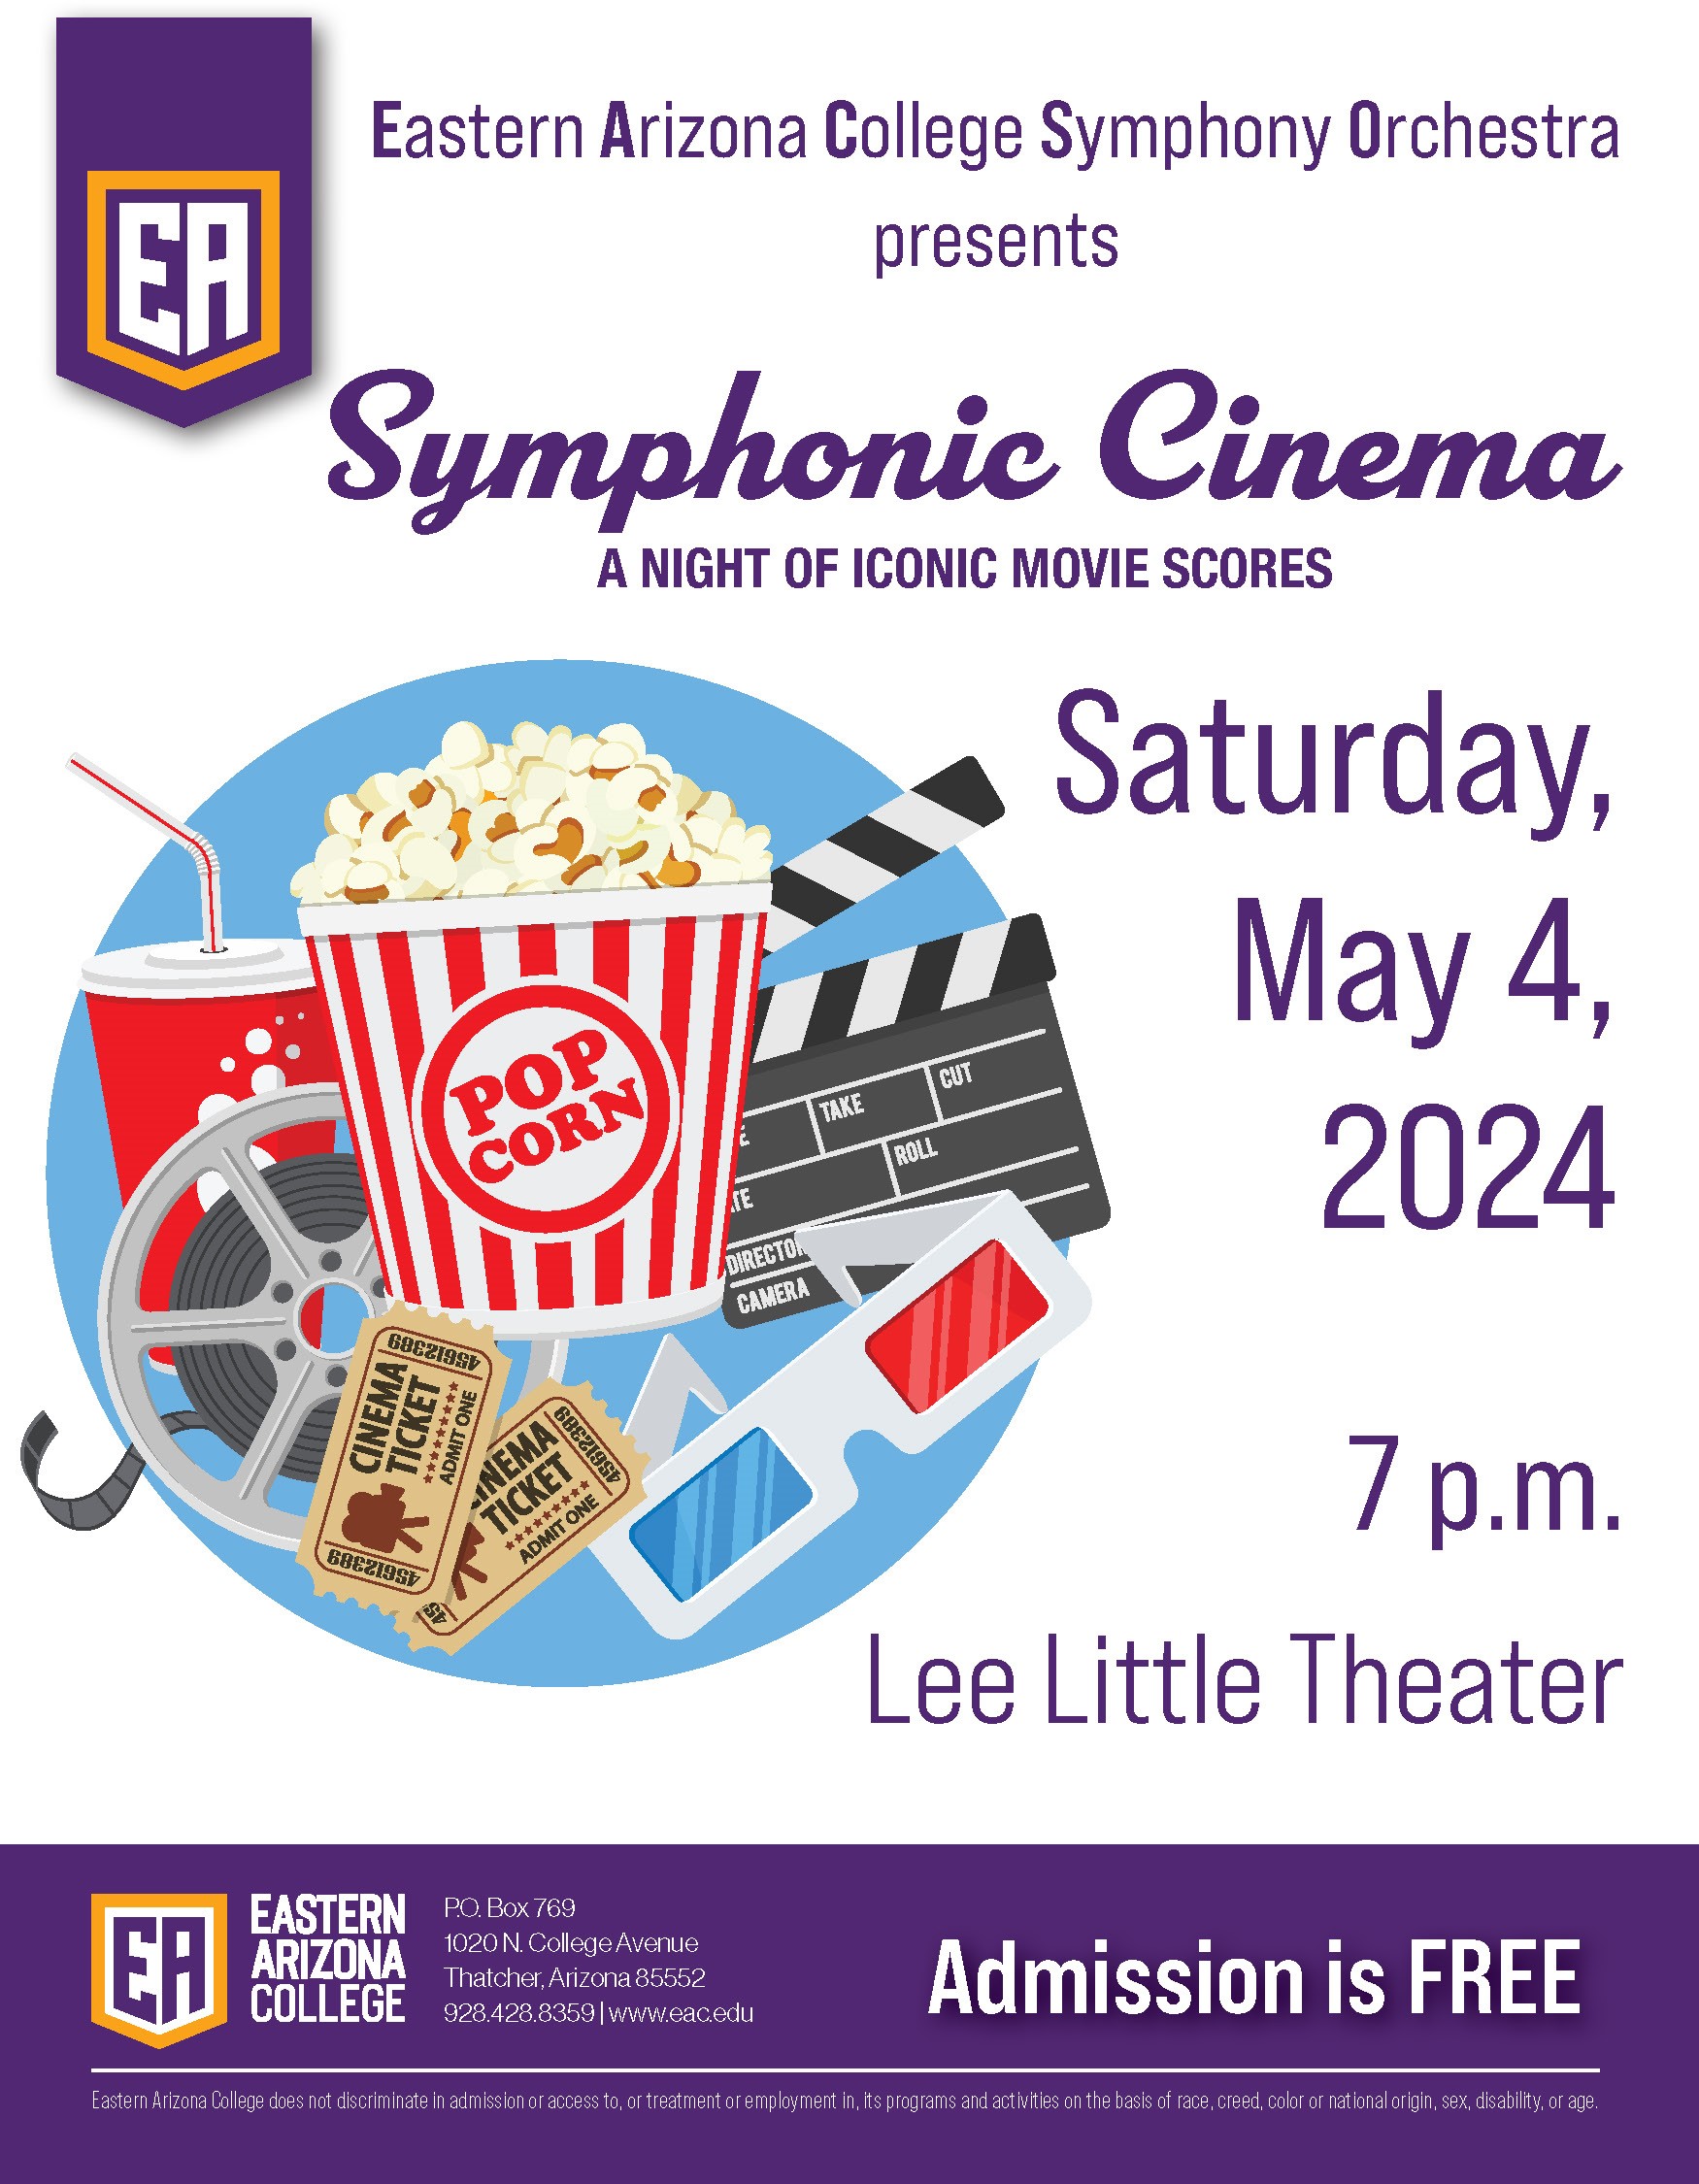 Eastern Arizona College Symphony Orchestra presents Symphony Cinema